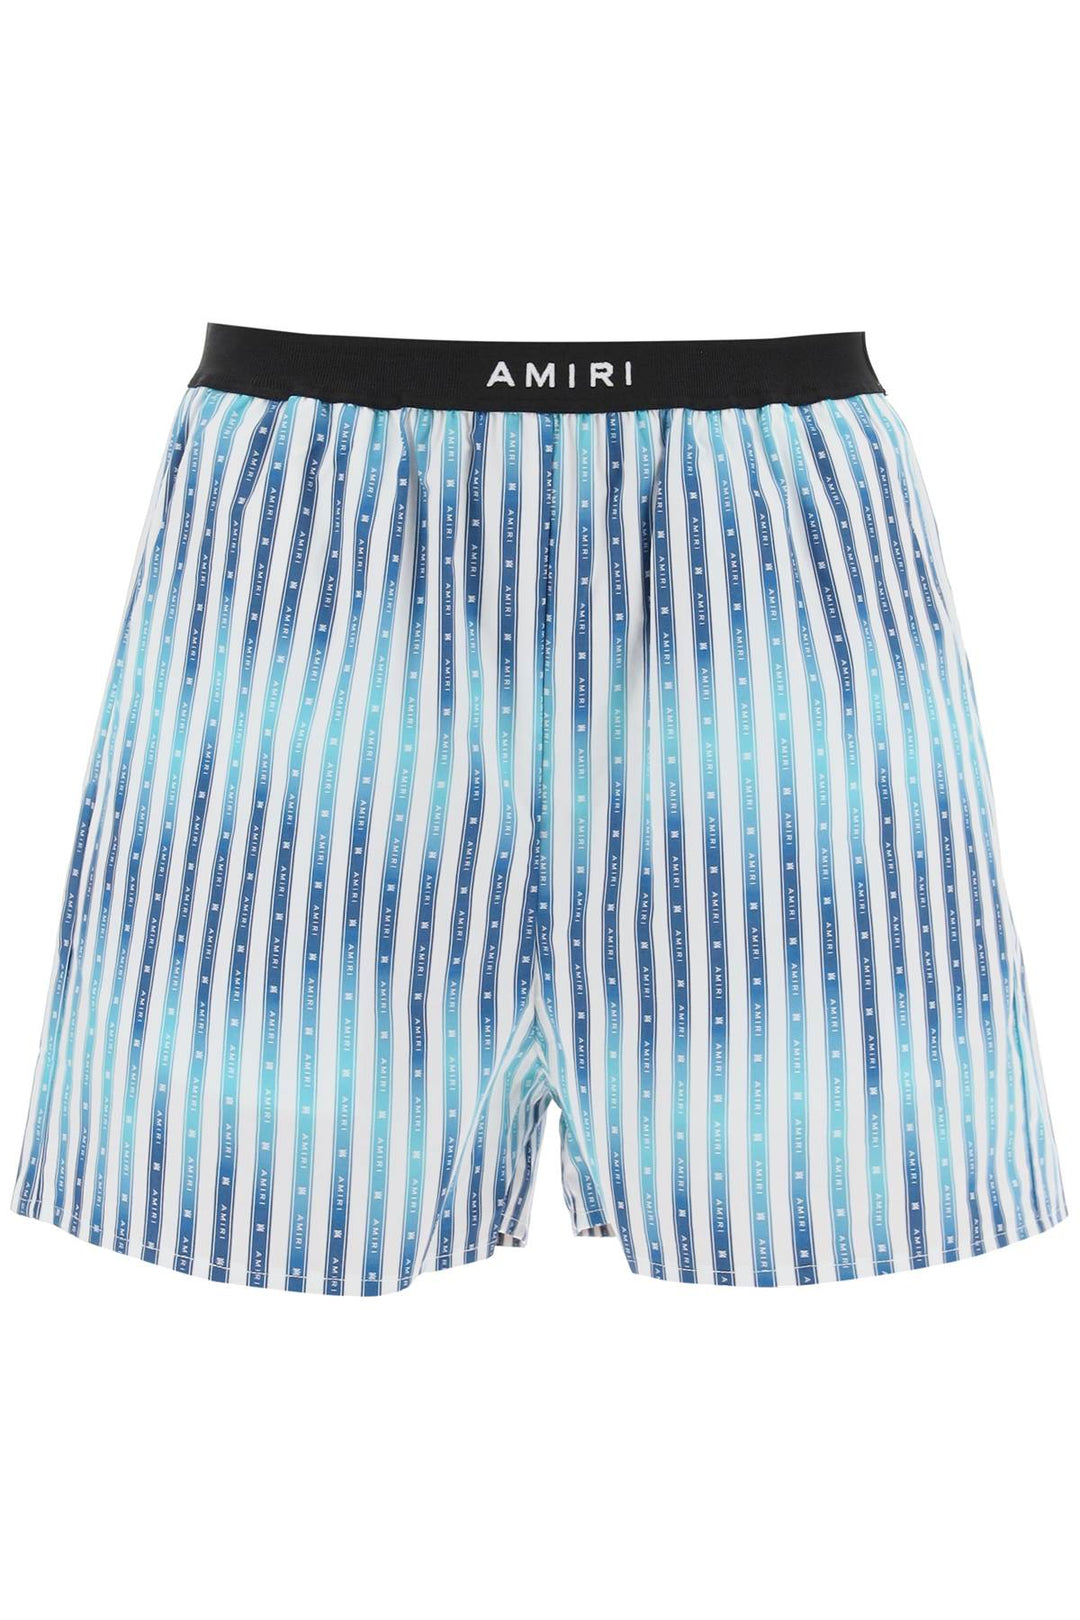 Amiri Striped Poplin Shorts   Bianco